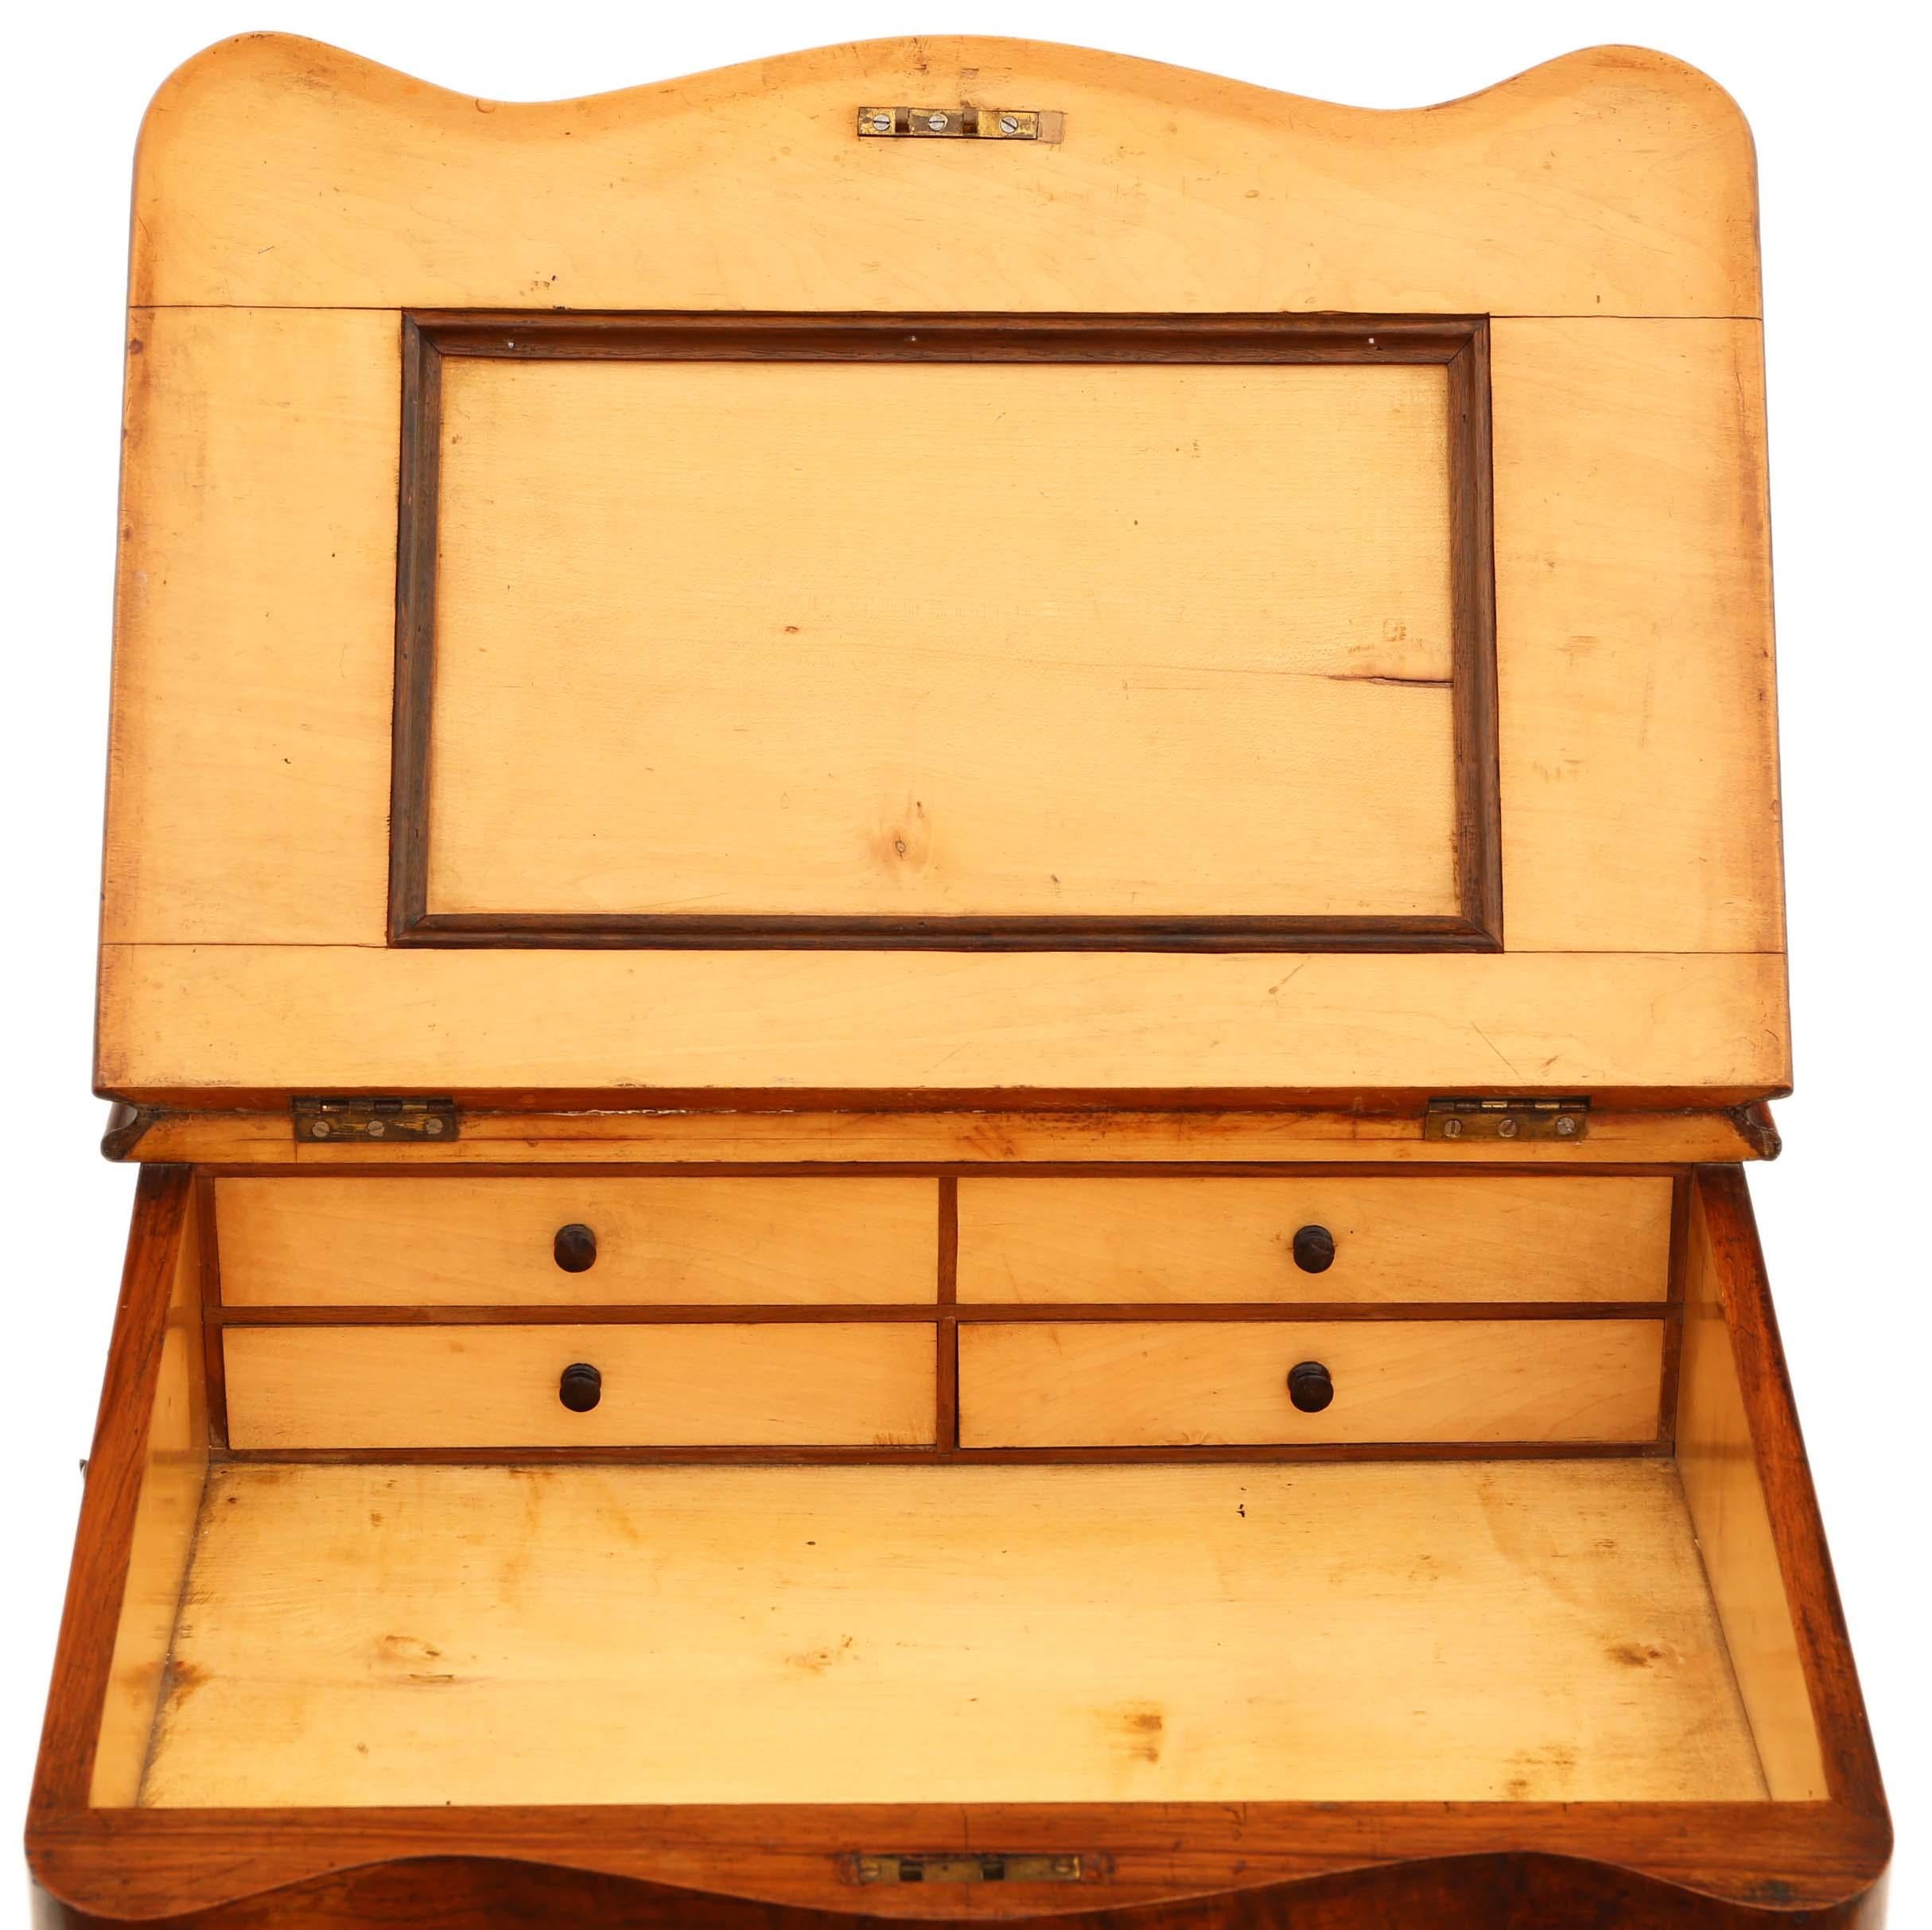 British Antique Quality Victorian Figured Walnut Davenport Desk or Writing Table